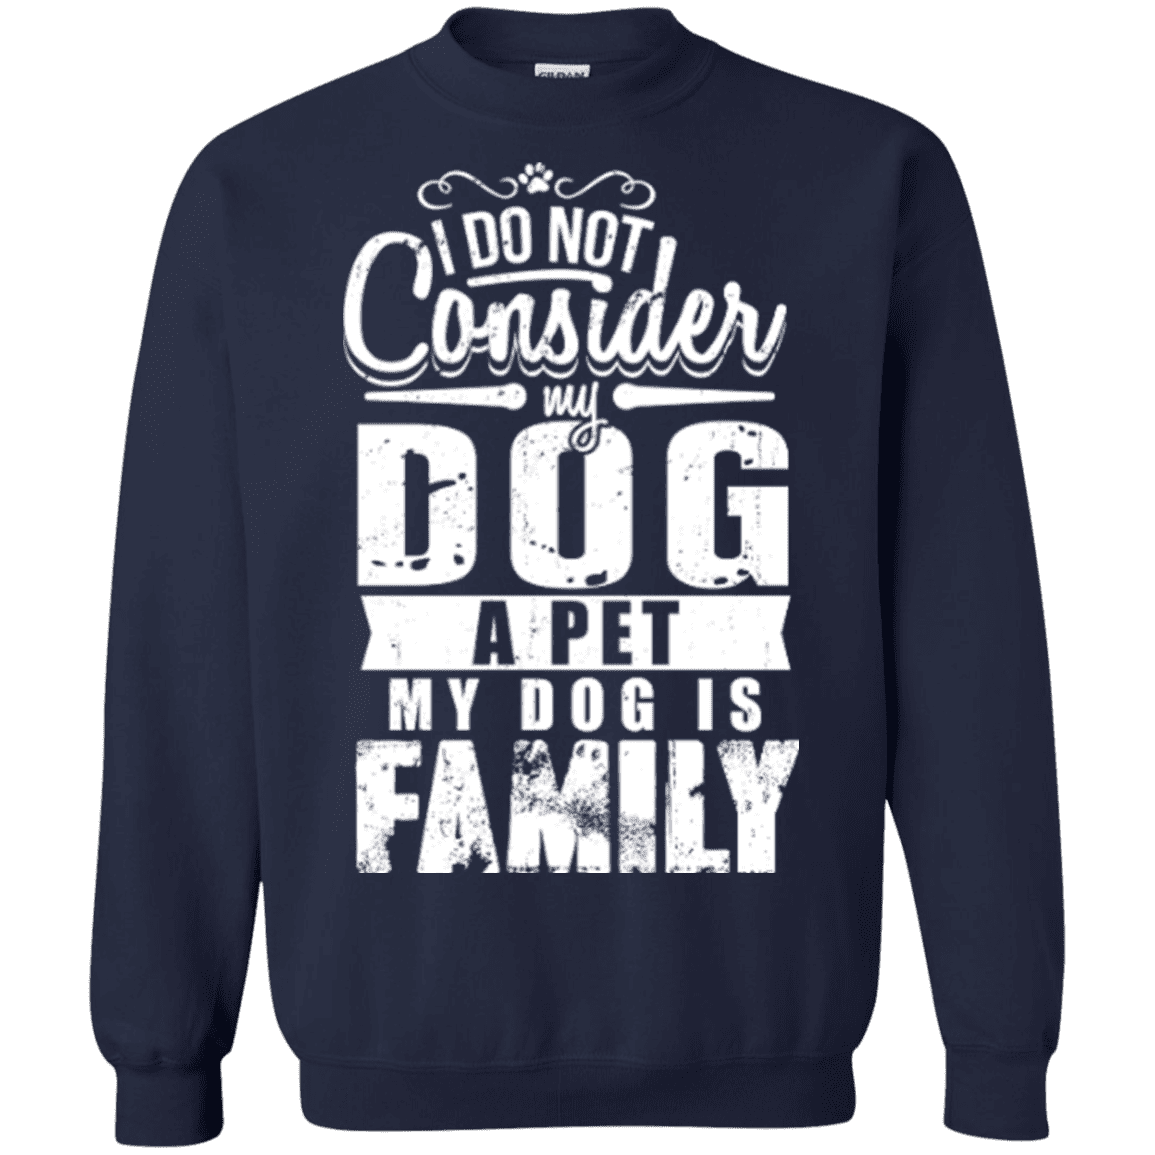 My Dog Is Family - Sweatshirt.